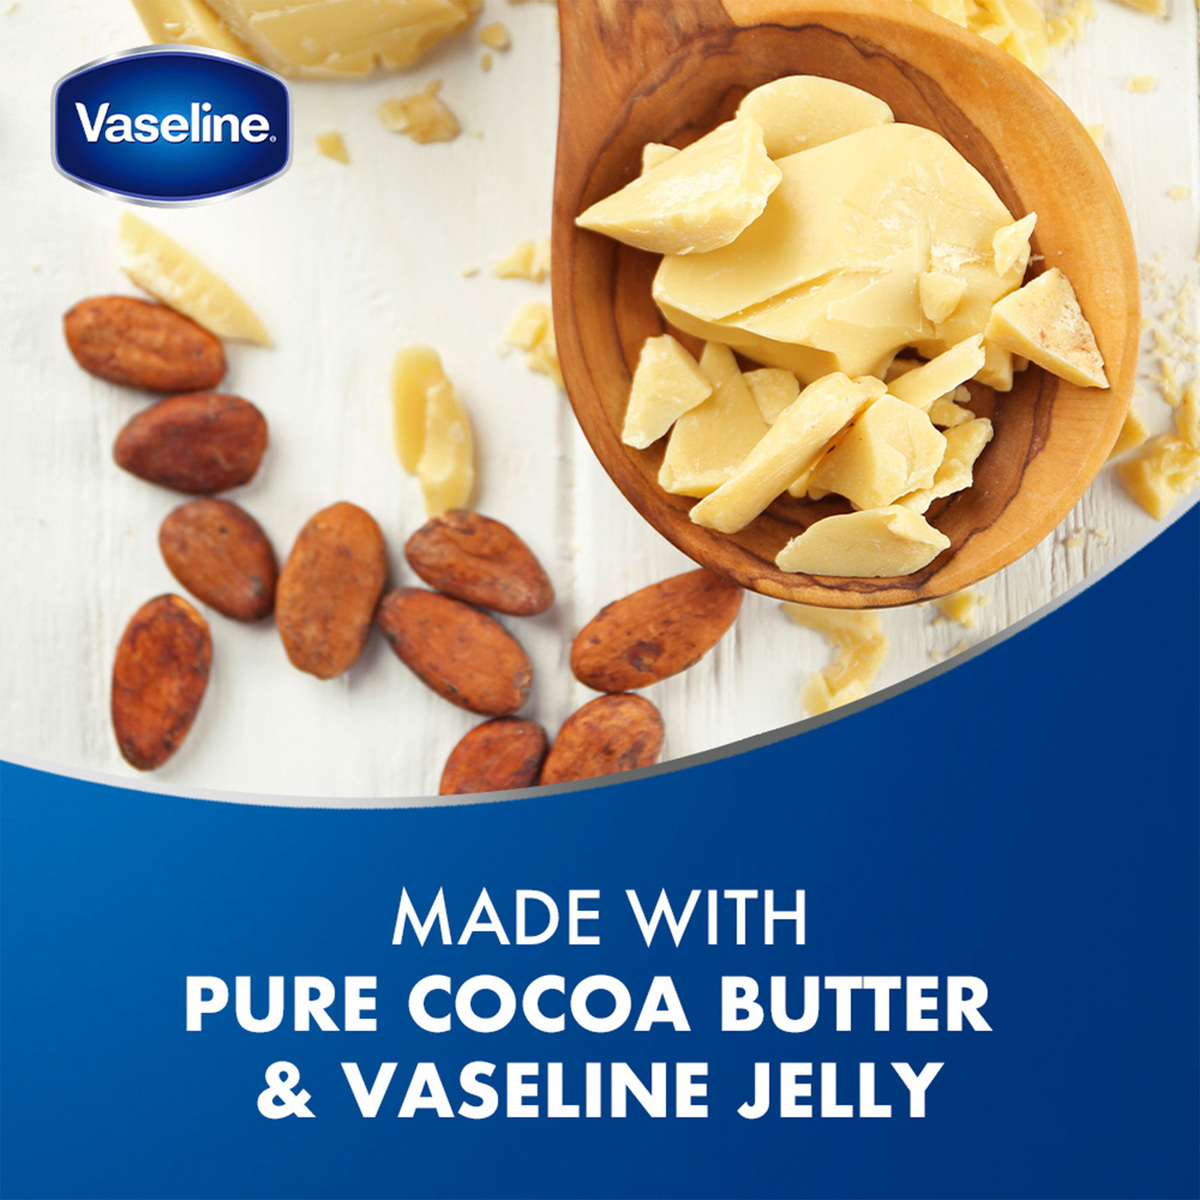 Vaseline Body Cream Intensive Care Cocoa Radiant 200 ml